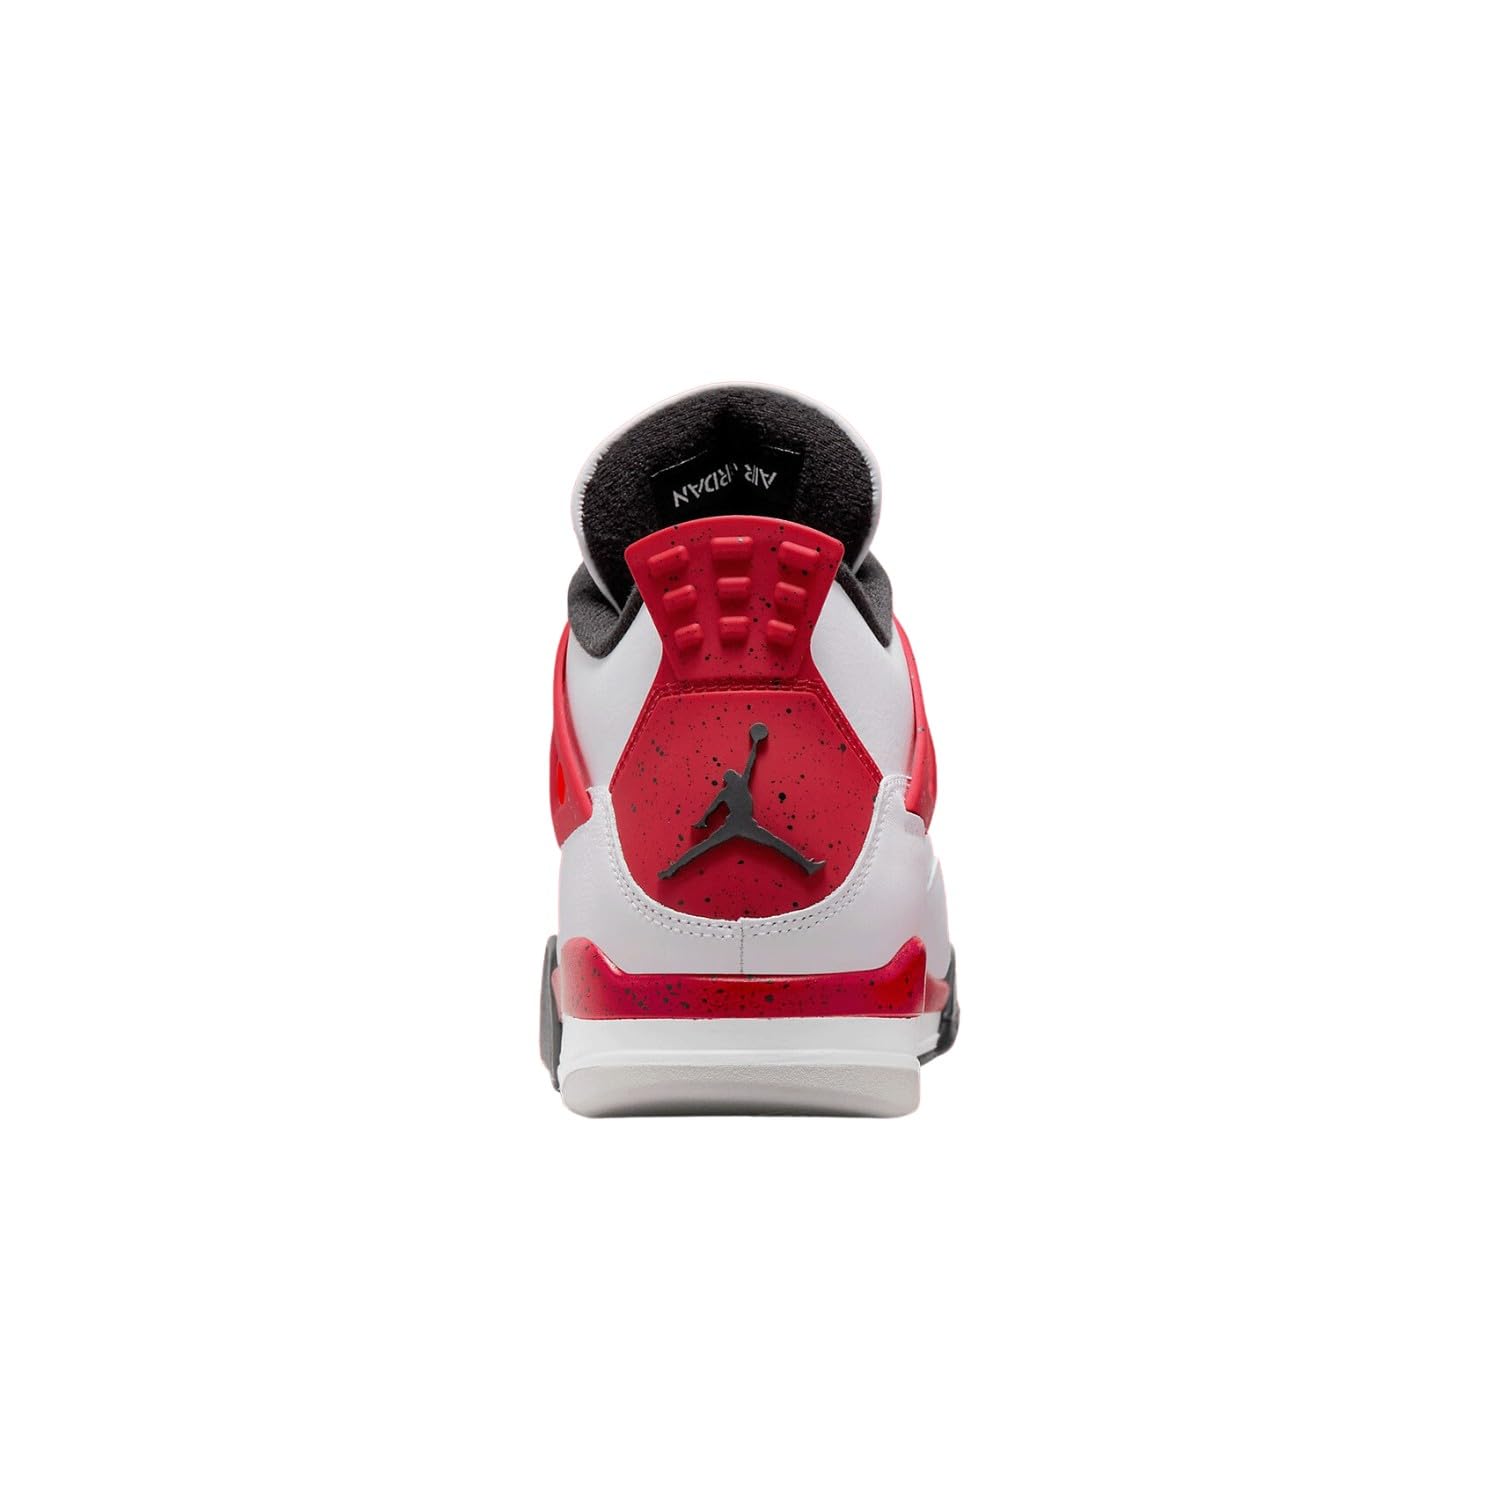 Jordan 4 Retro Mens Shoes Size - 10 White/Fire Red-Black